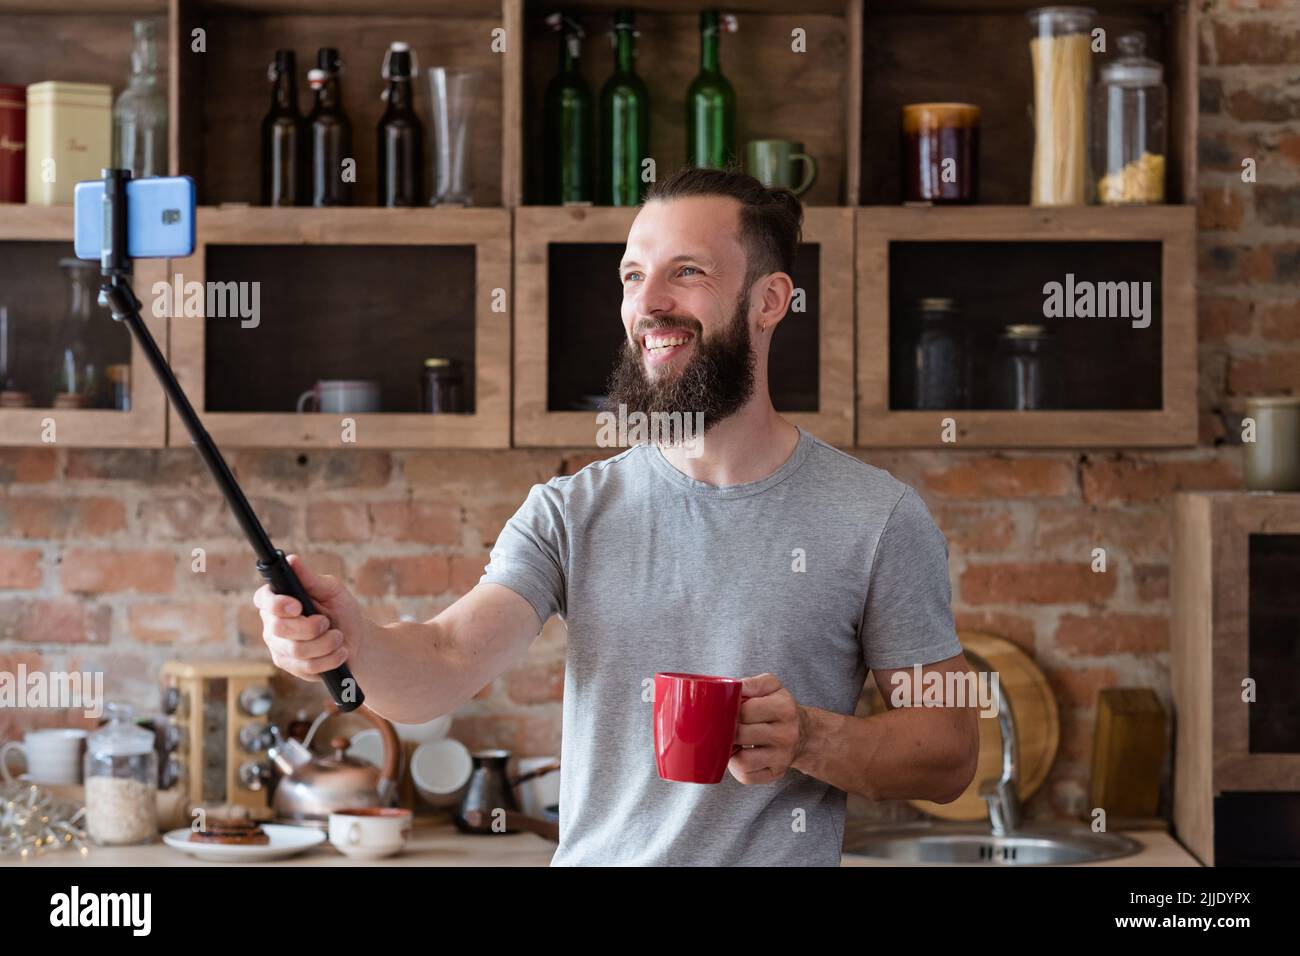 blog video stream man phone selfie stick kitchen Stock Photo